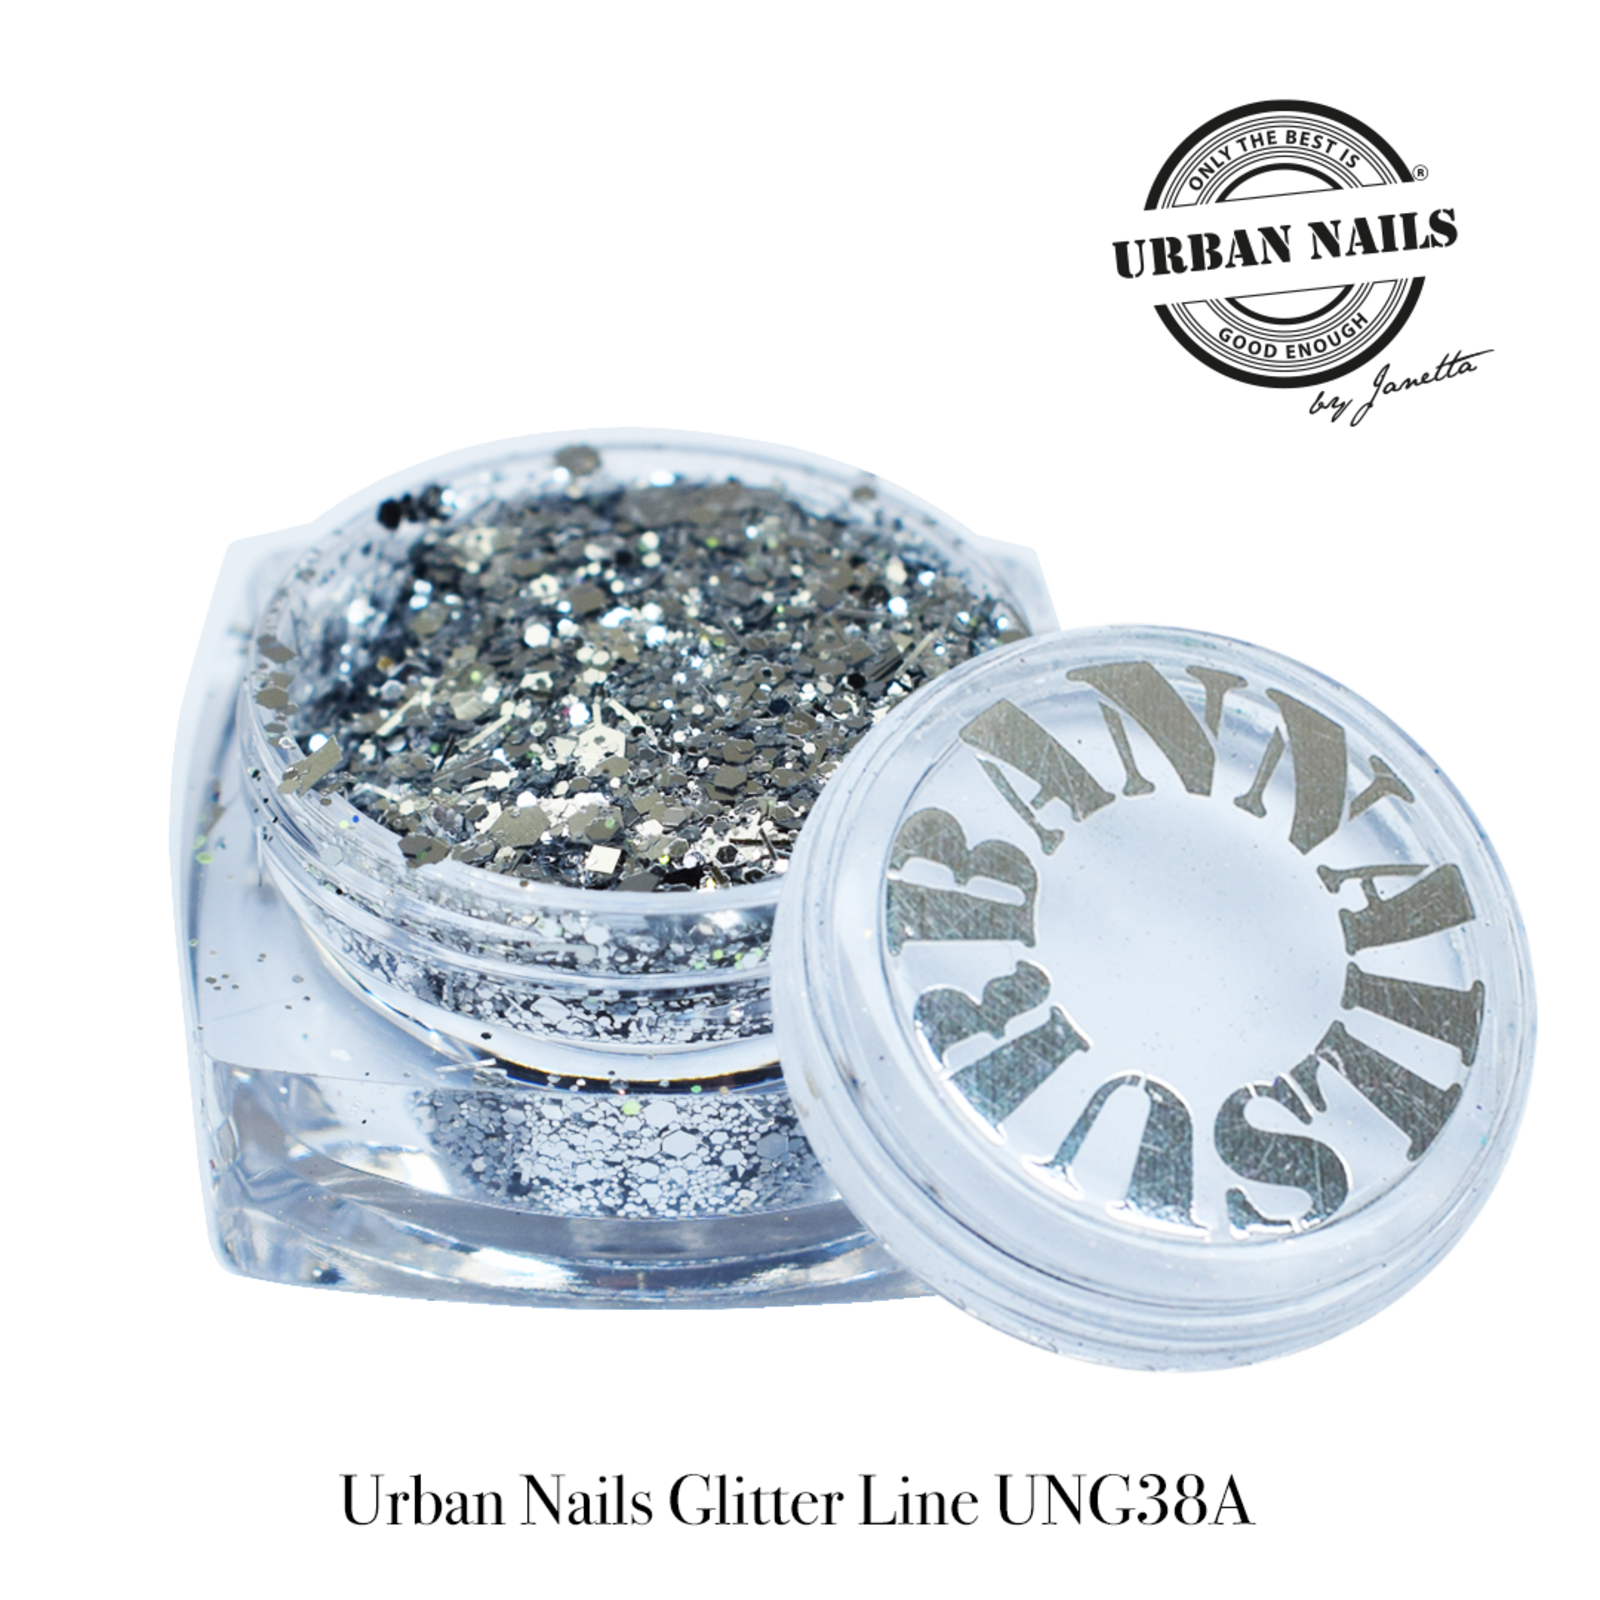 Urban nails Glitter Line UNG38-A